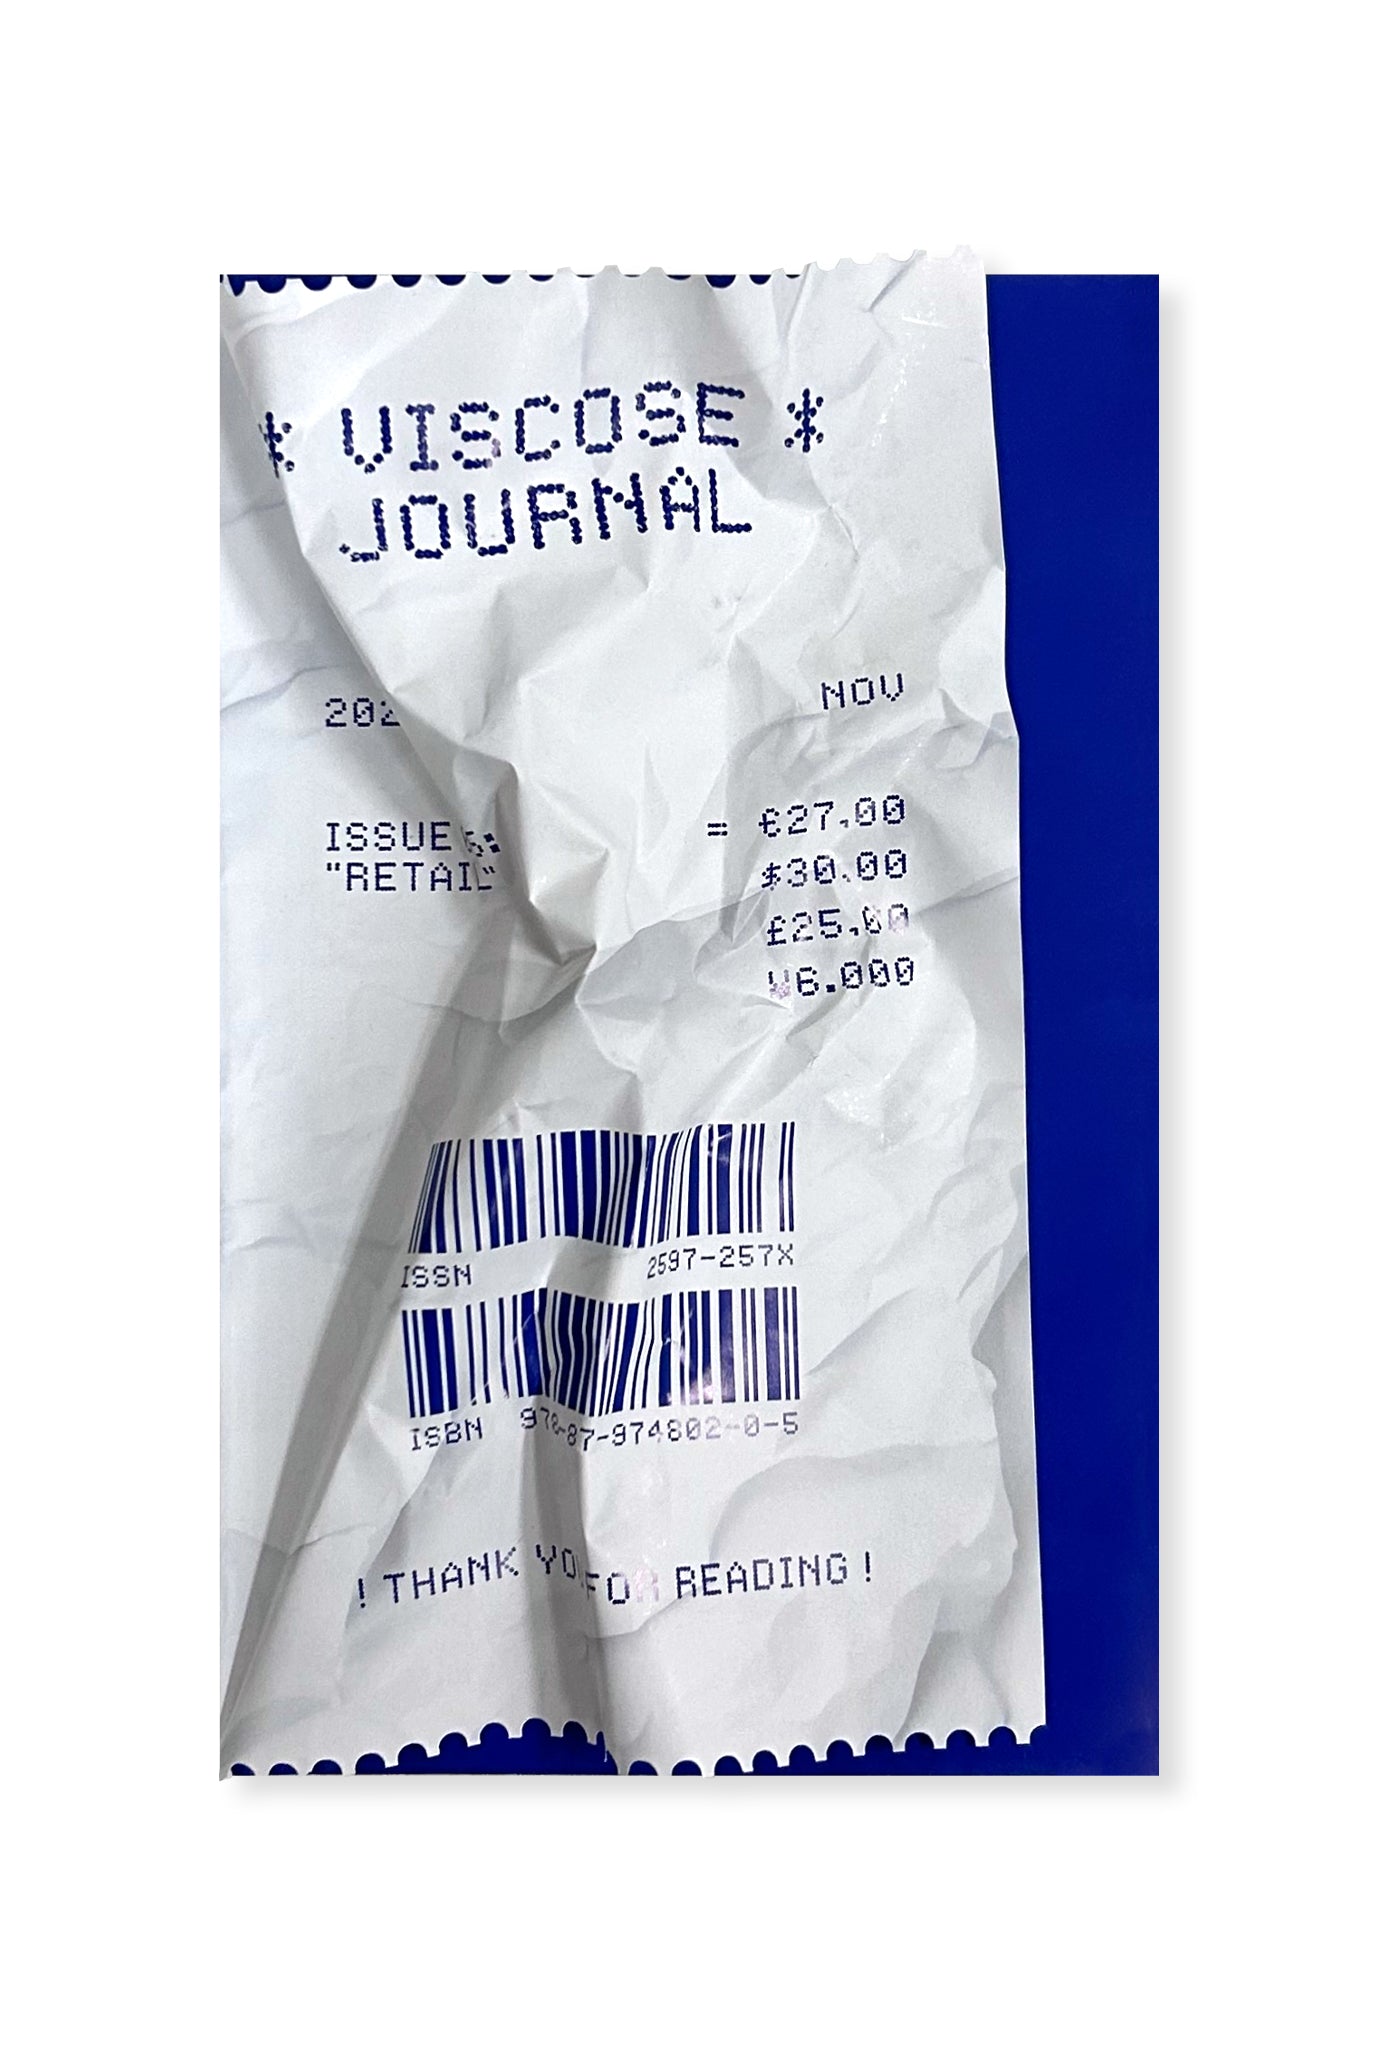 Viscose Journal, Issue 5 – Retail